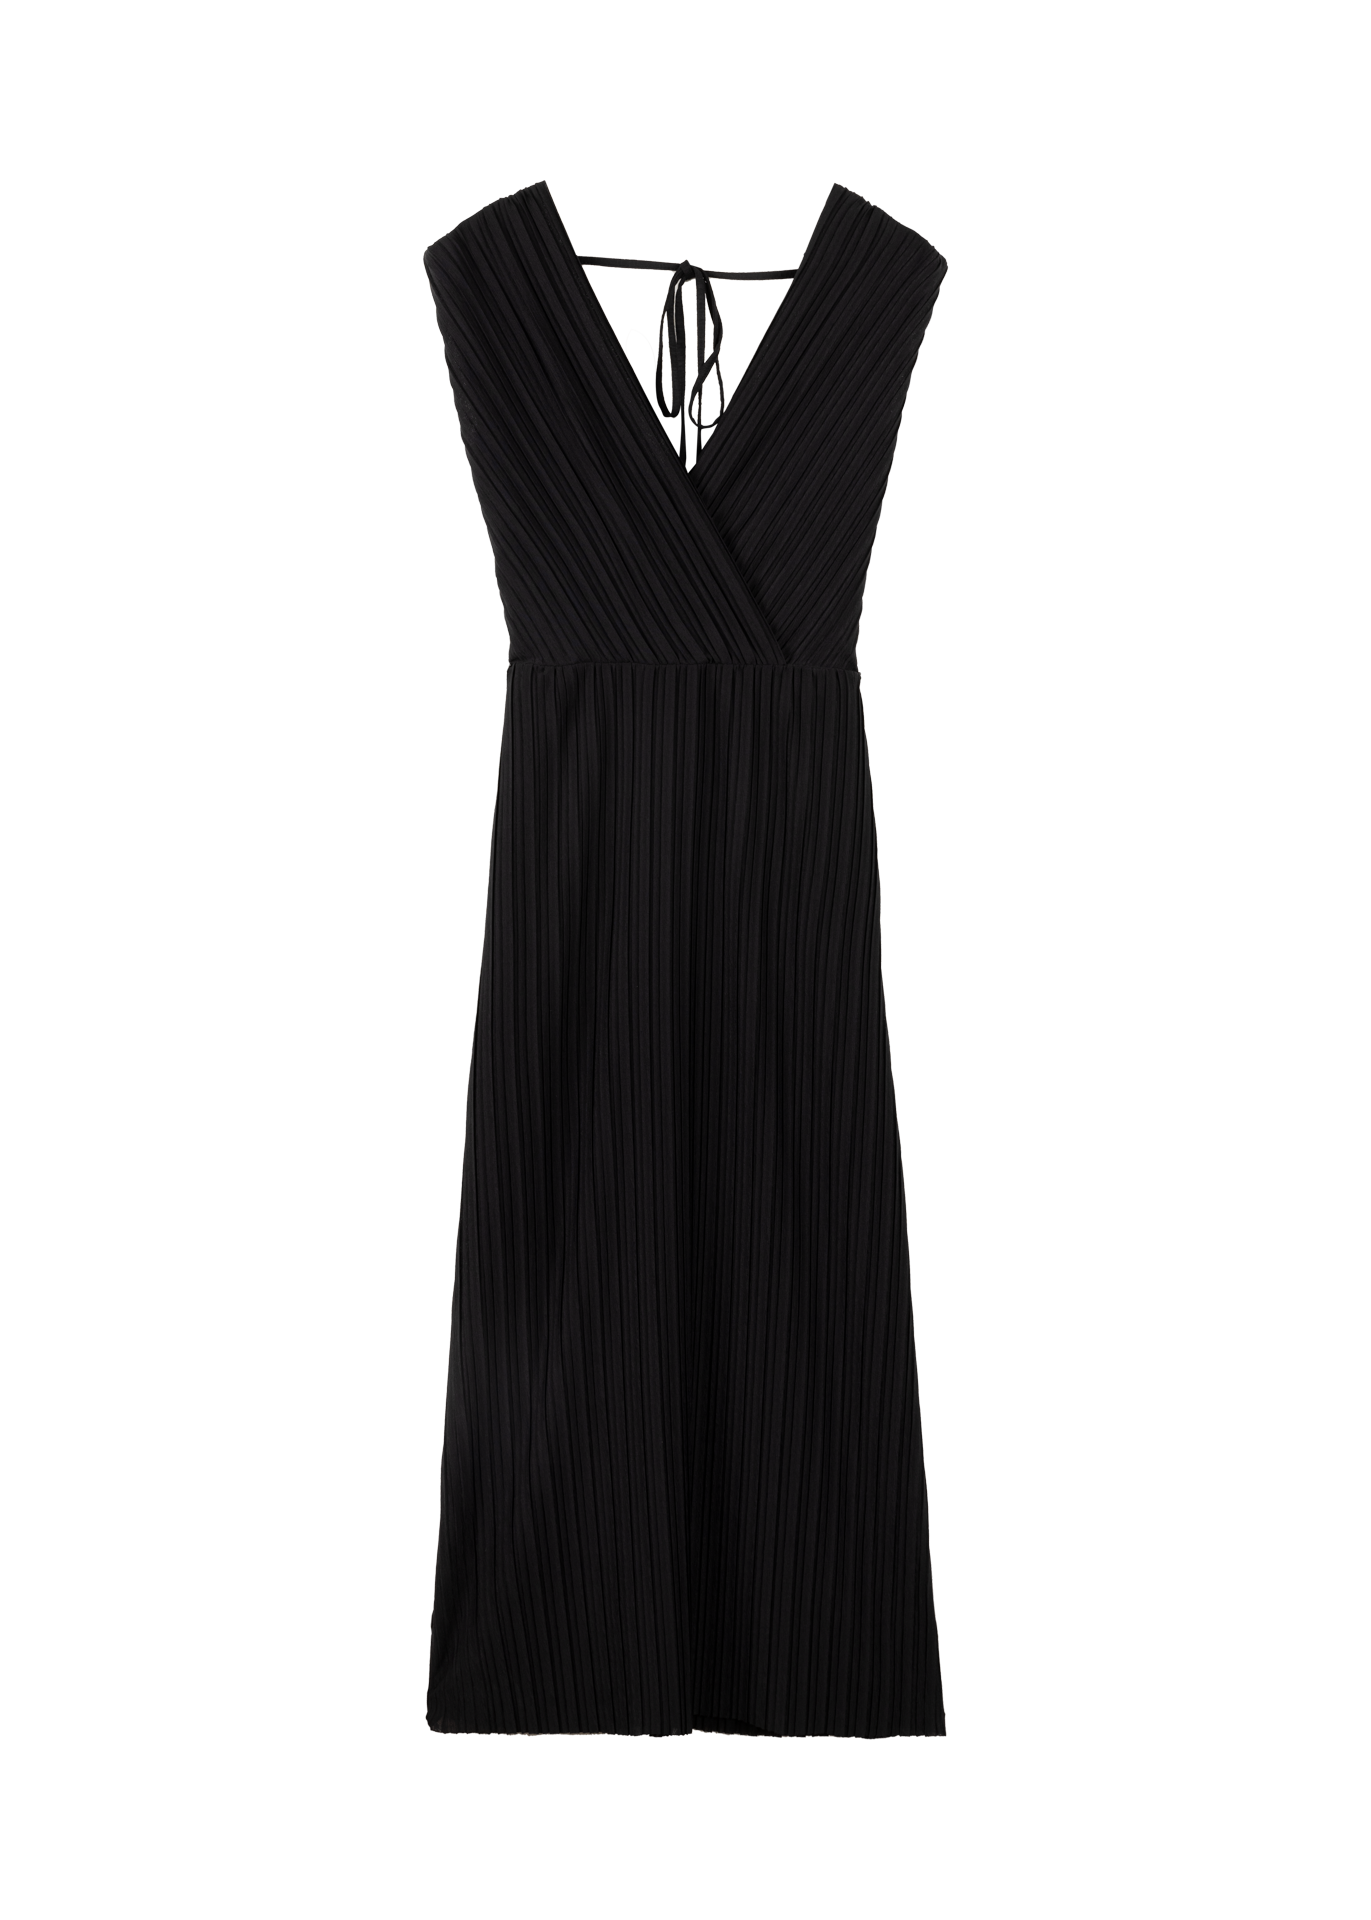 Dresses for Women | The official Vanilia webshop